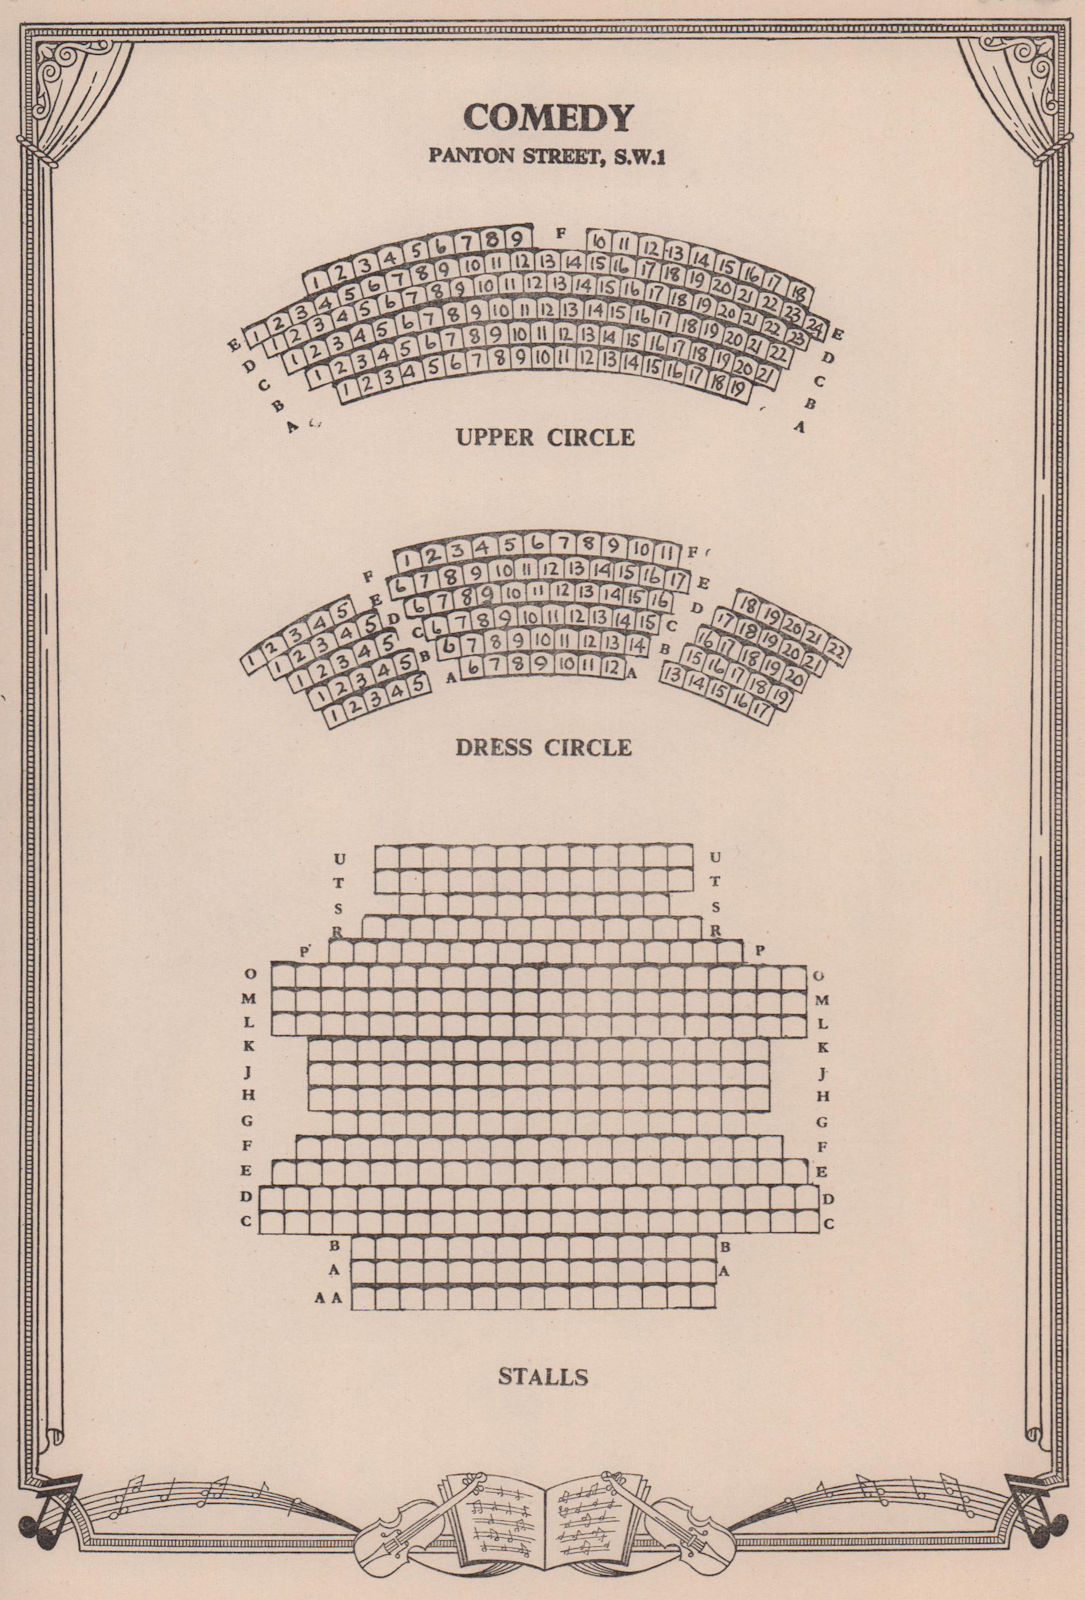 Comedy (now Harold Pinter) Theatre, Panton Street. Vintage seating plan 1955